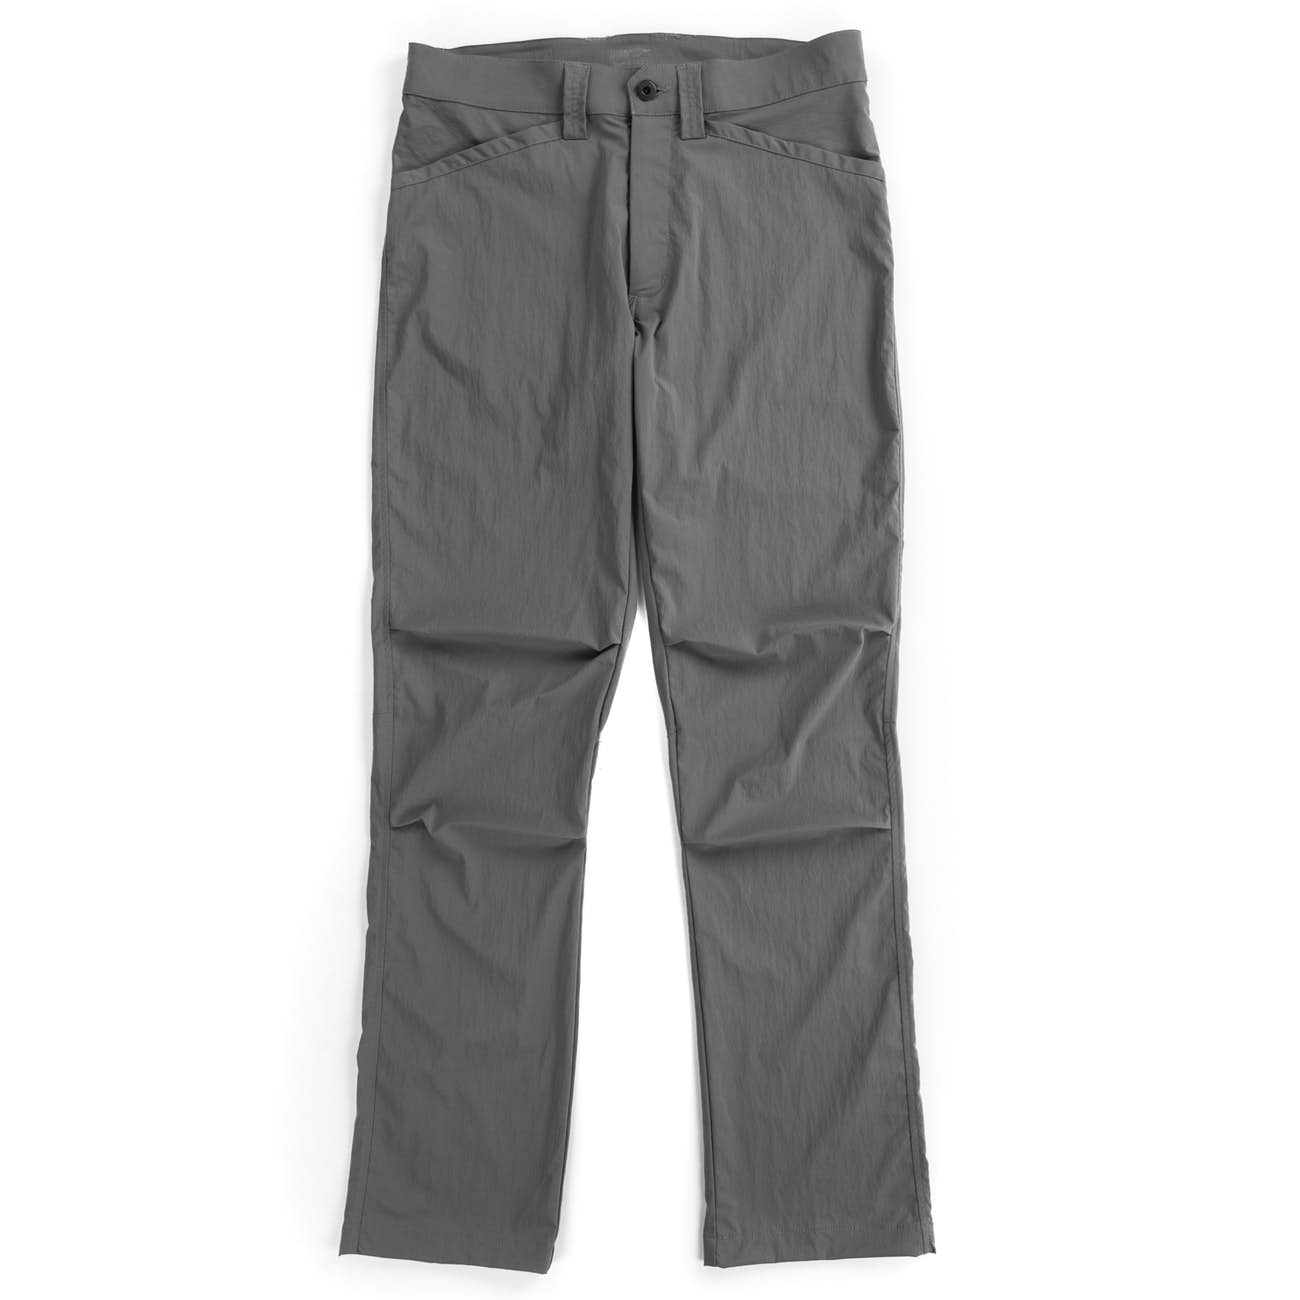 goruck simple pants front